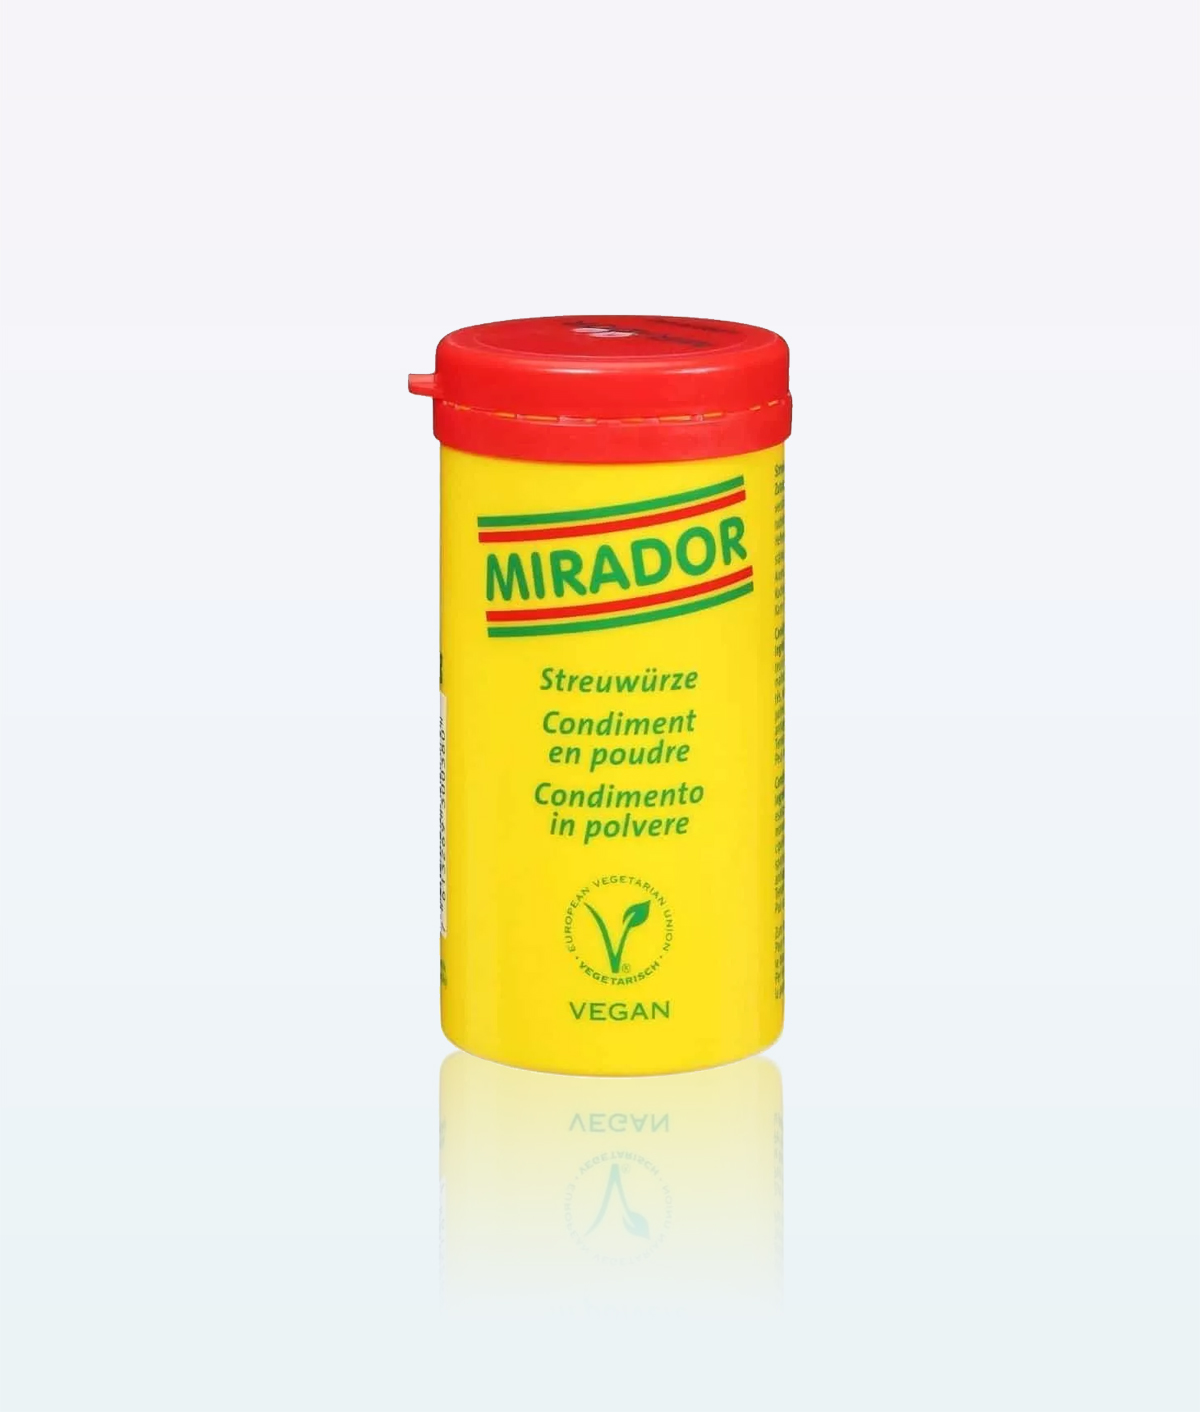 Mirador Condiment powder Vegan